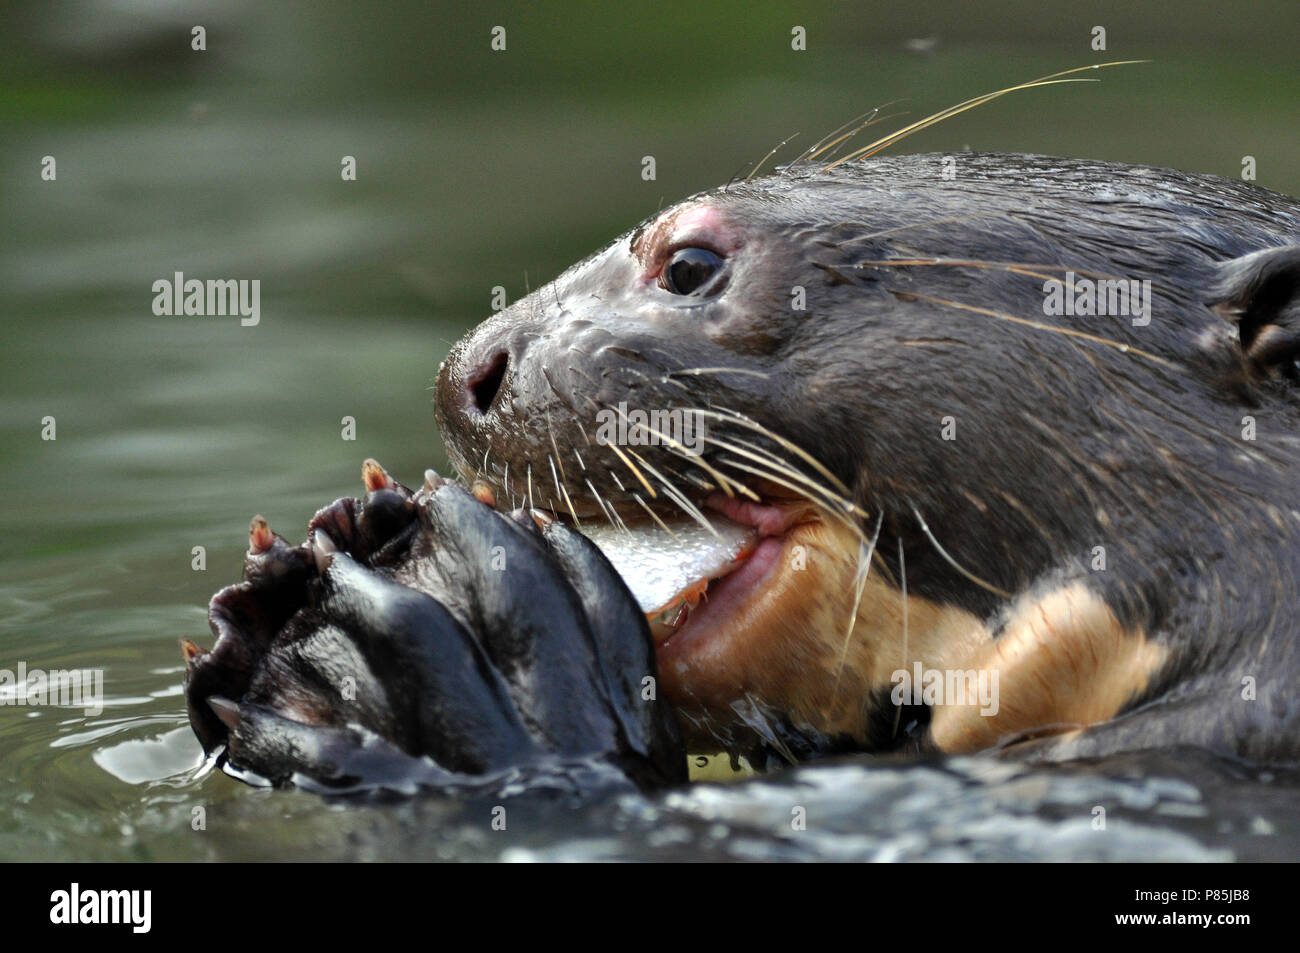 Giant Otter in the Pantanal, Brazil Stock Photo